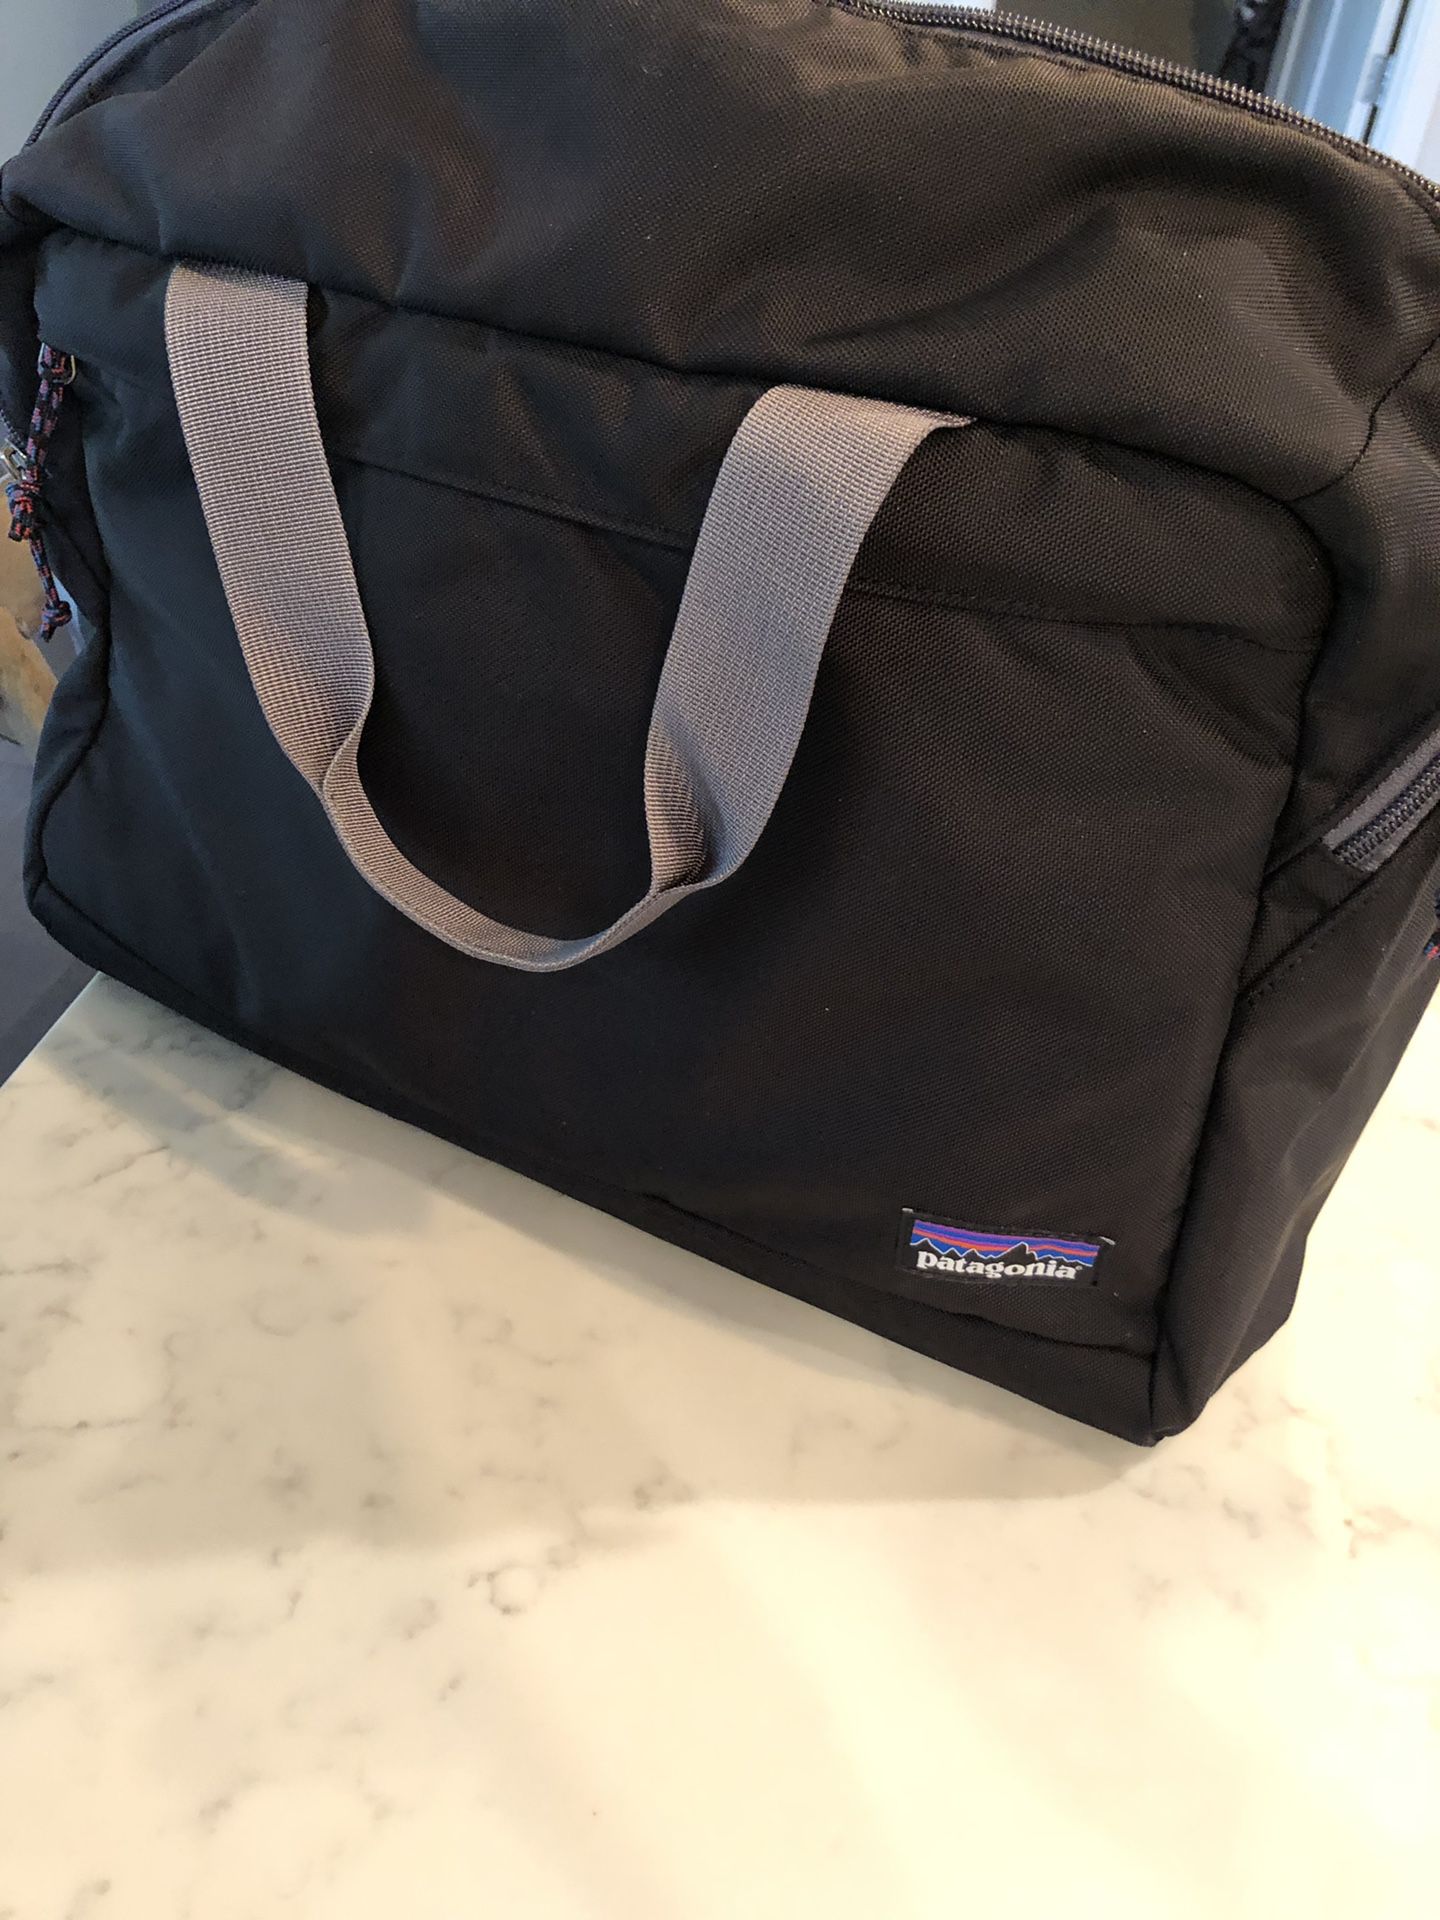 Patagonia laptop bag new w/o tags